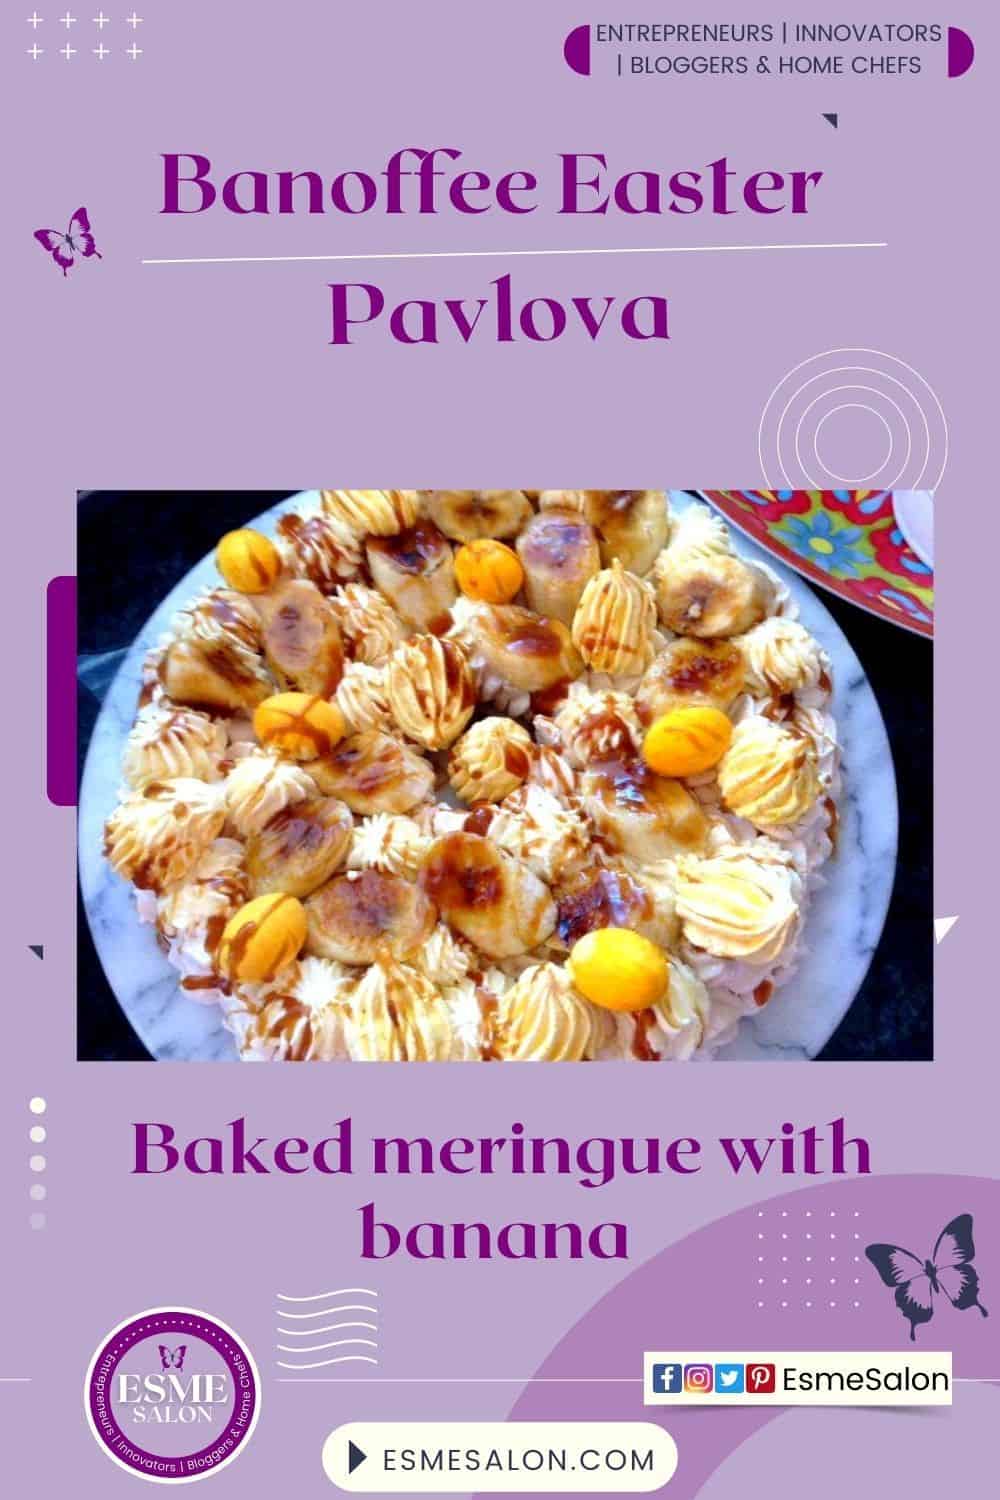 Banoffee Easter Pavlova dessert pie made from bananas, cream, and a thick caramel sauce